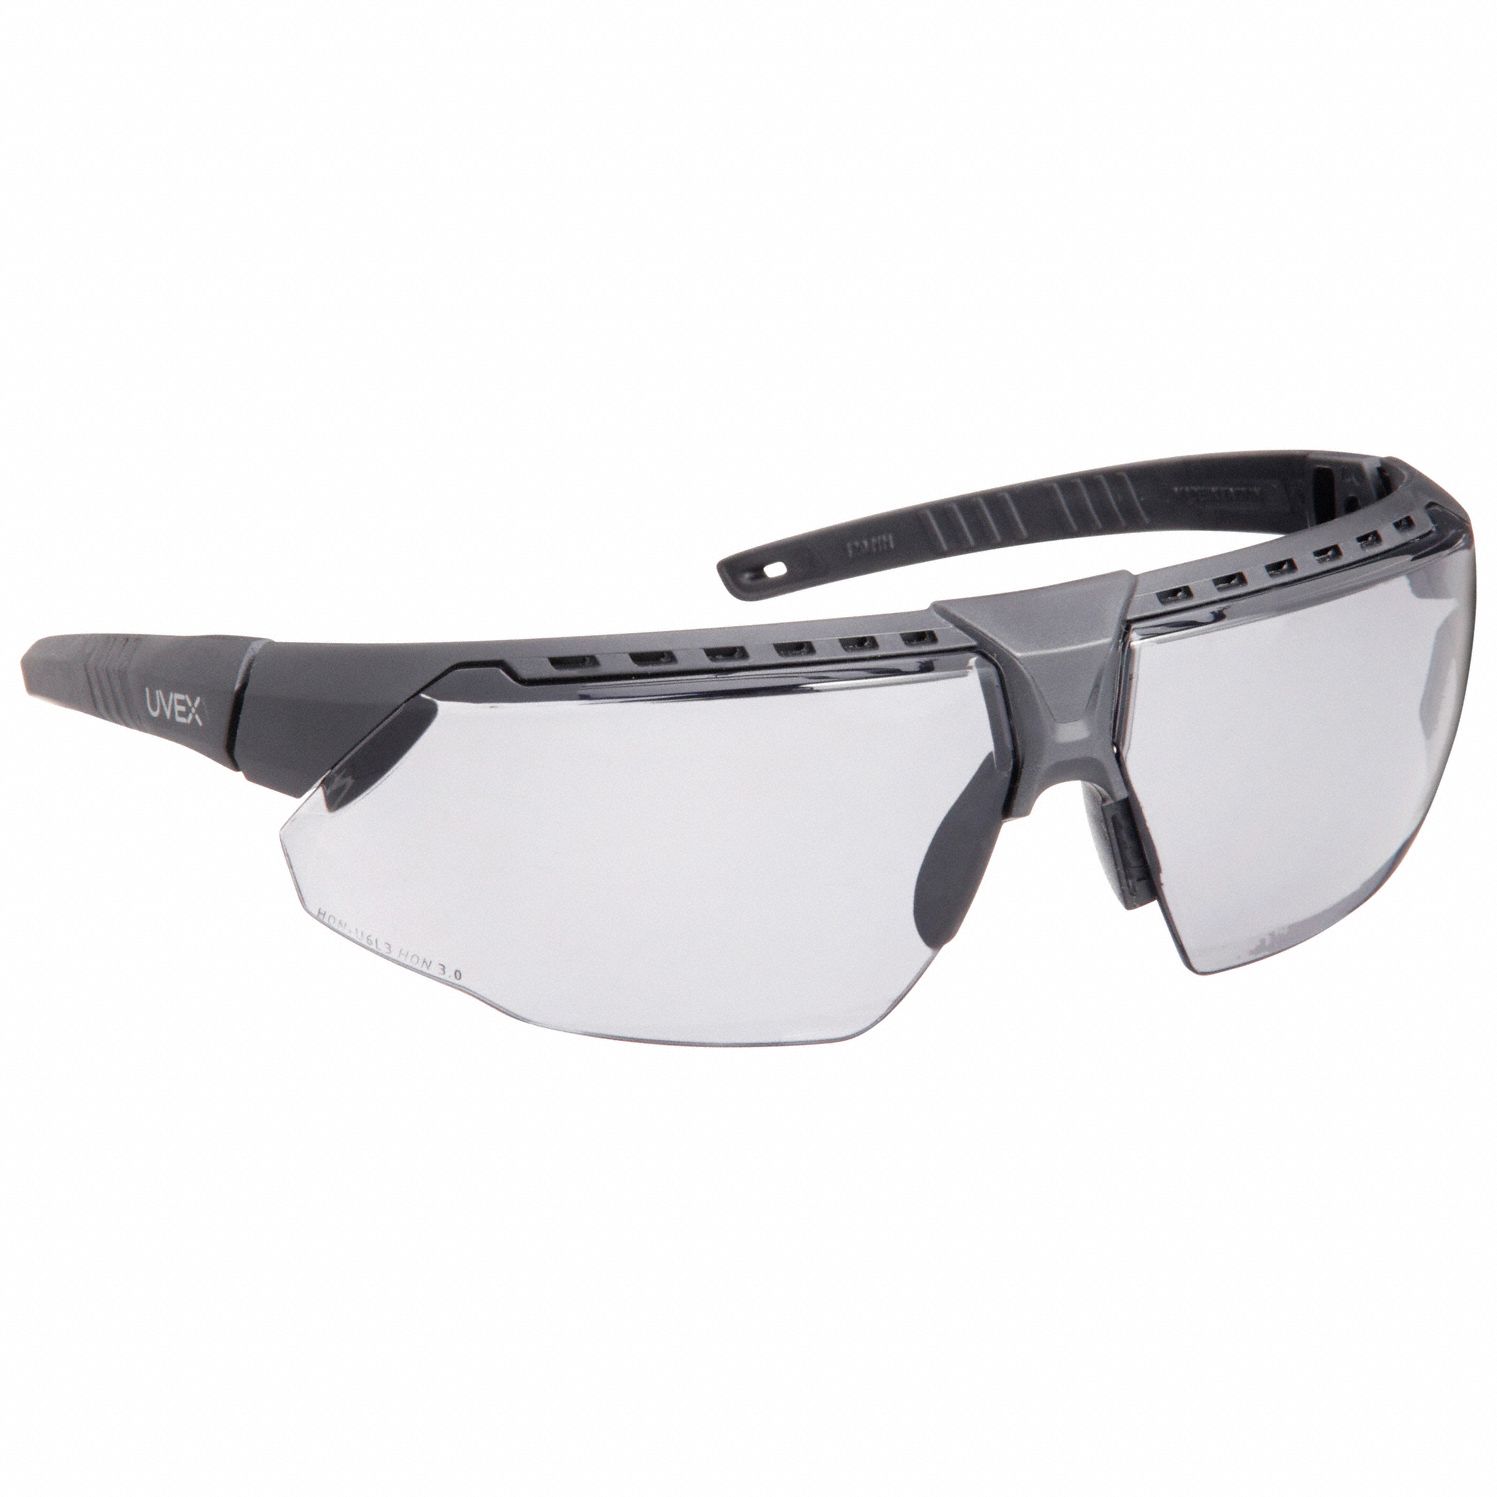 Honeywell Uvex Anti Fog Anti Scratch Brow Foam Lining Safety Glasses 401y29 S2851hs Grainger